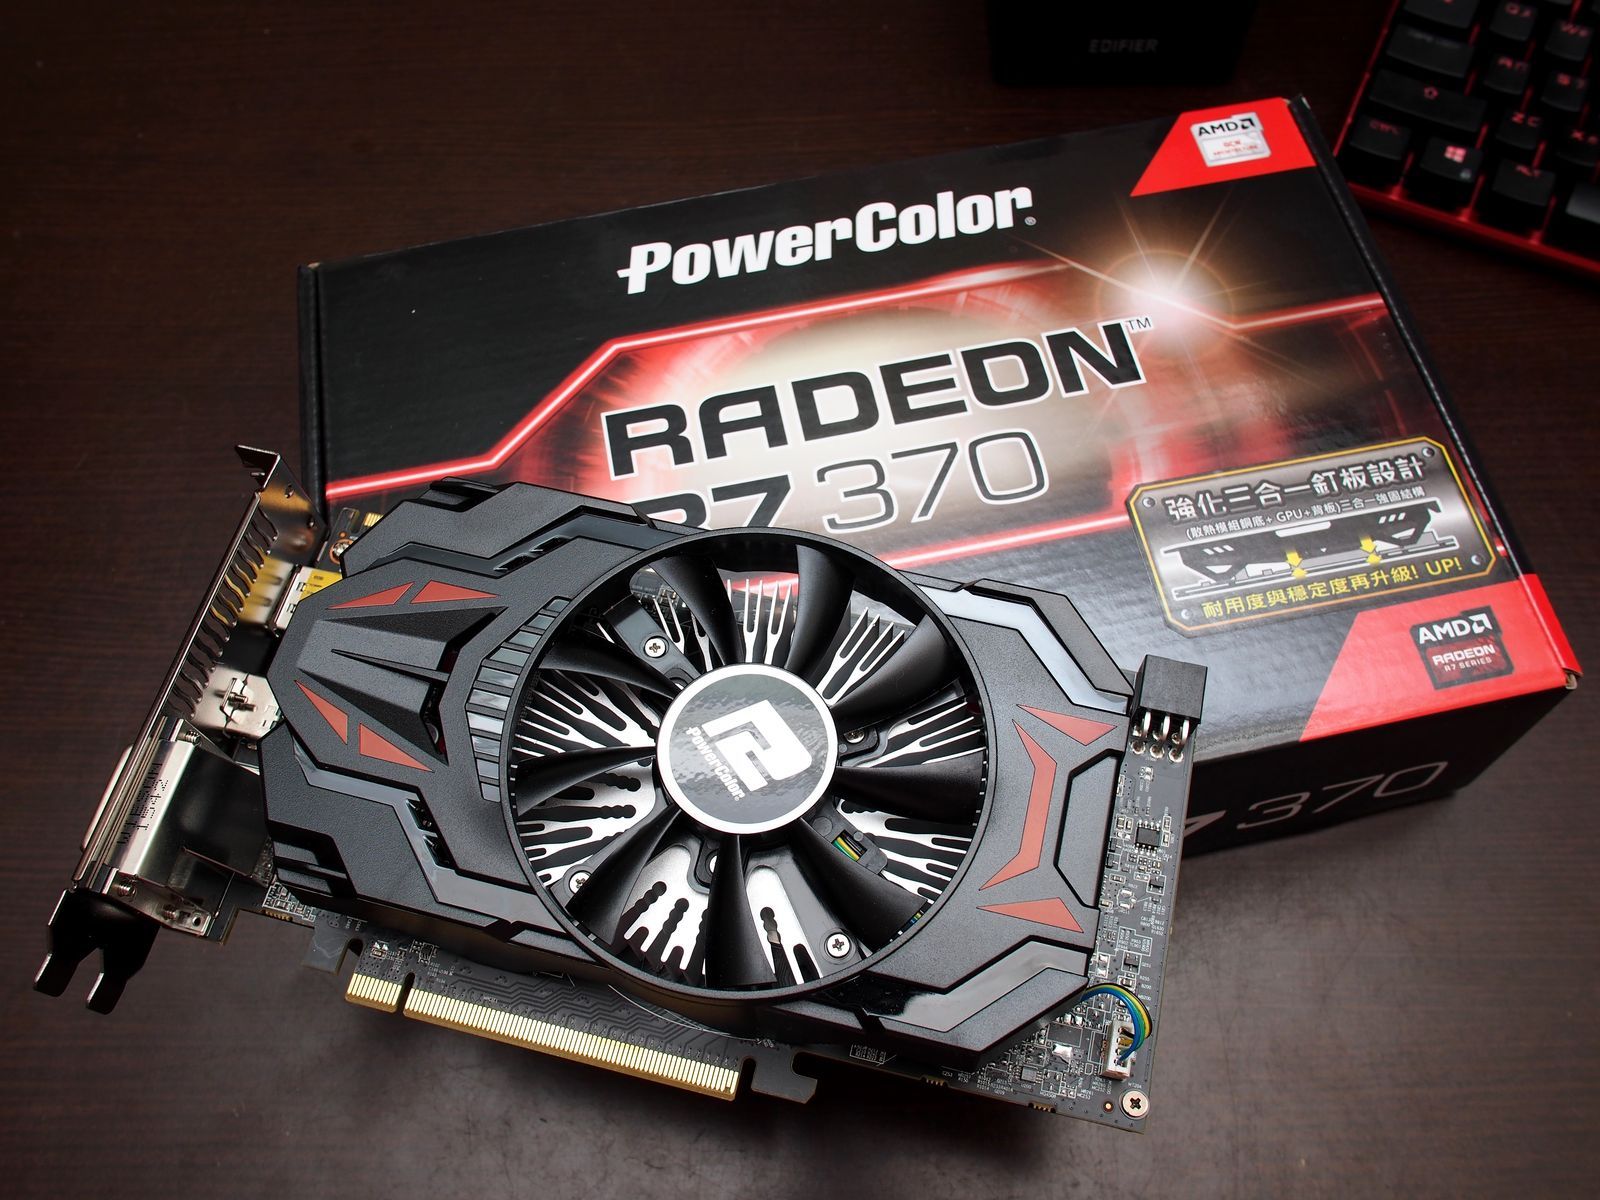 Radeon r7 купить. AMD r7 370 2gb. POWERCOLOR r7 370 кулер. Radeon r7 370 2gb. R7 370 4gb POWERCOLOR.